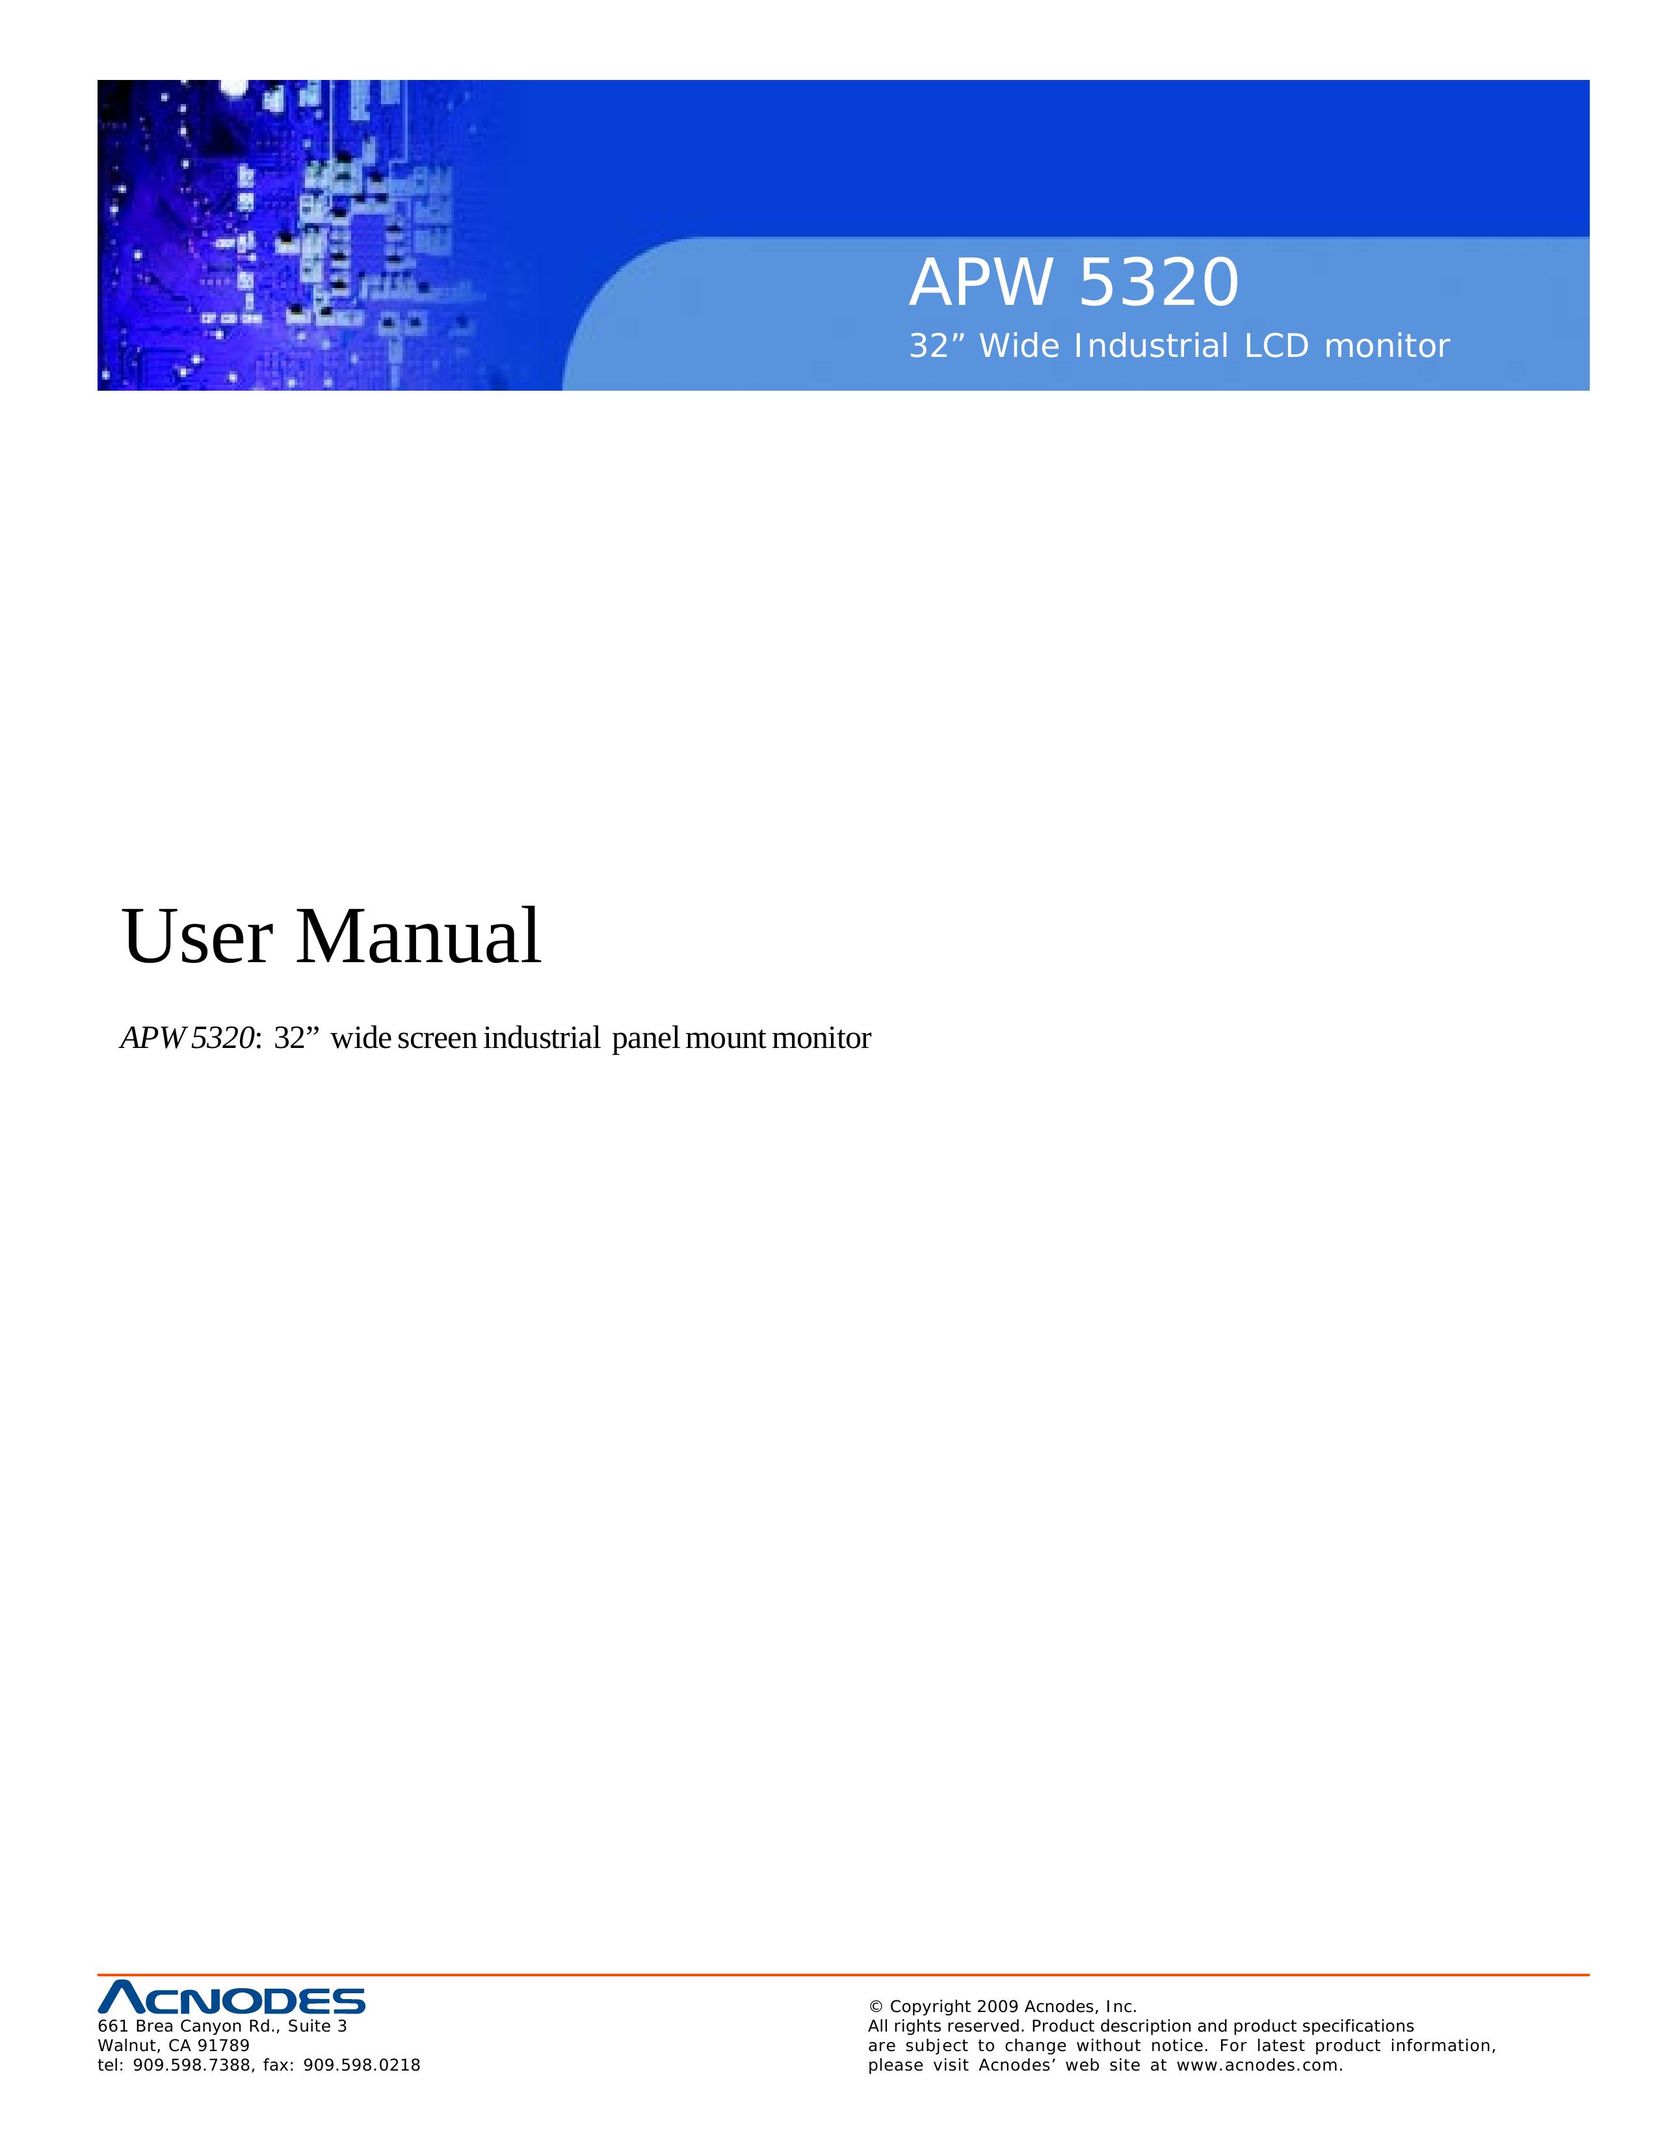 Acnodes APW 5320 Computer Monitor User Manual